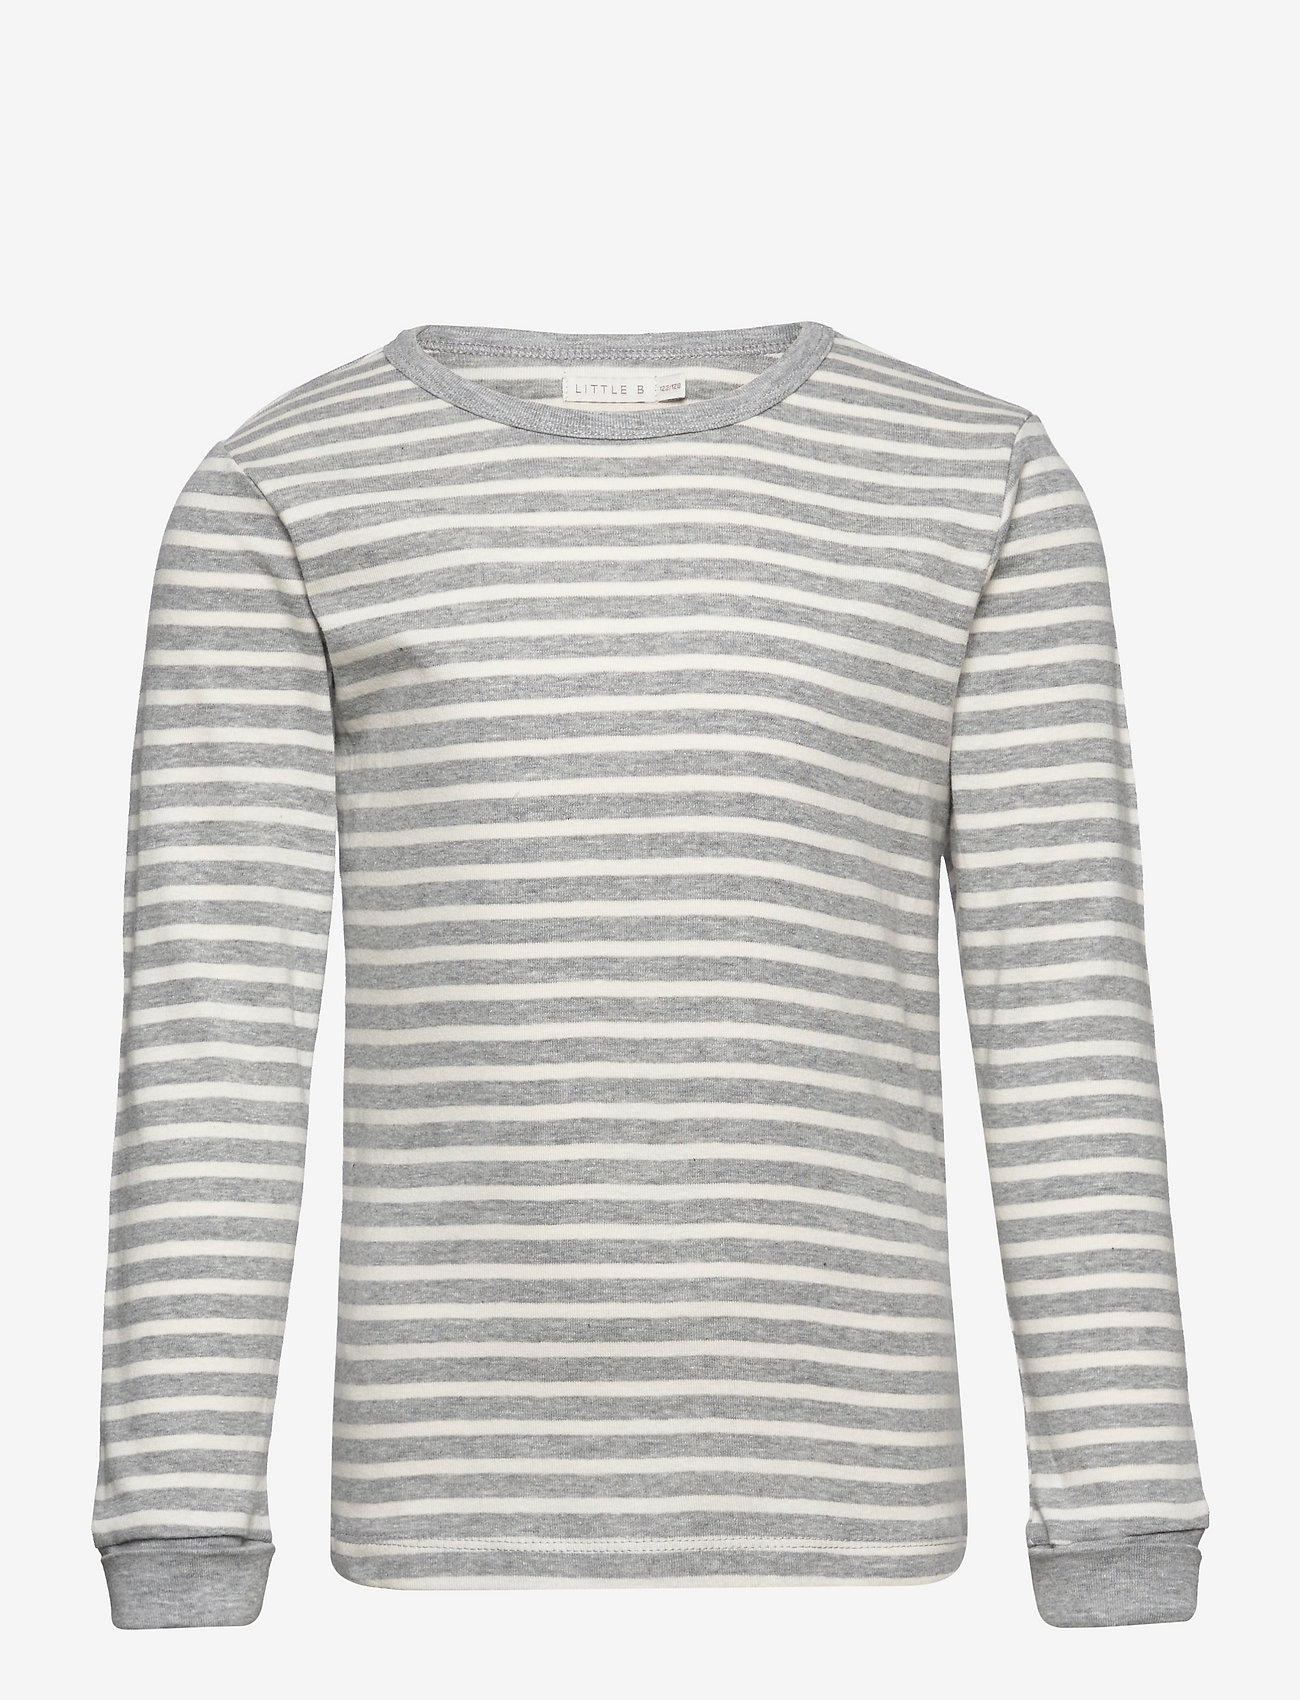 Little B - T-shirt long sleeve cotton - pitkähihaiset paidat - light grey stripe - 0